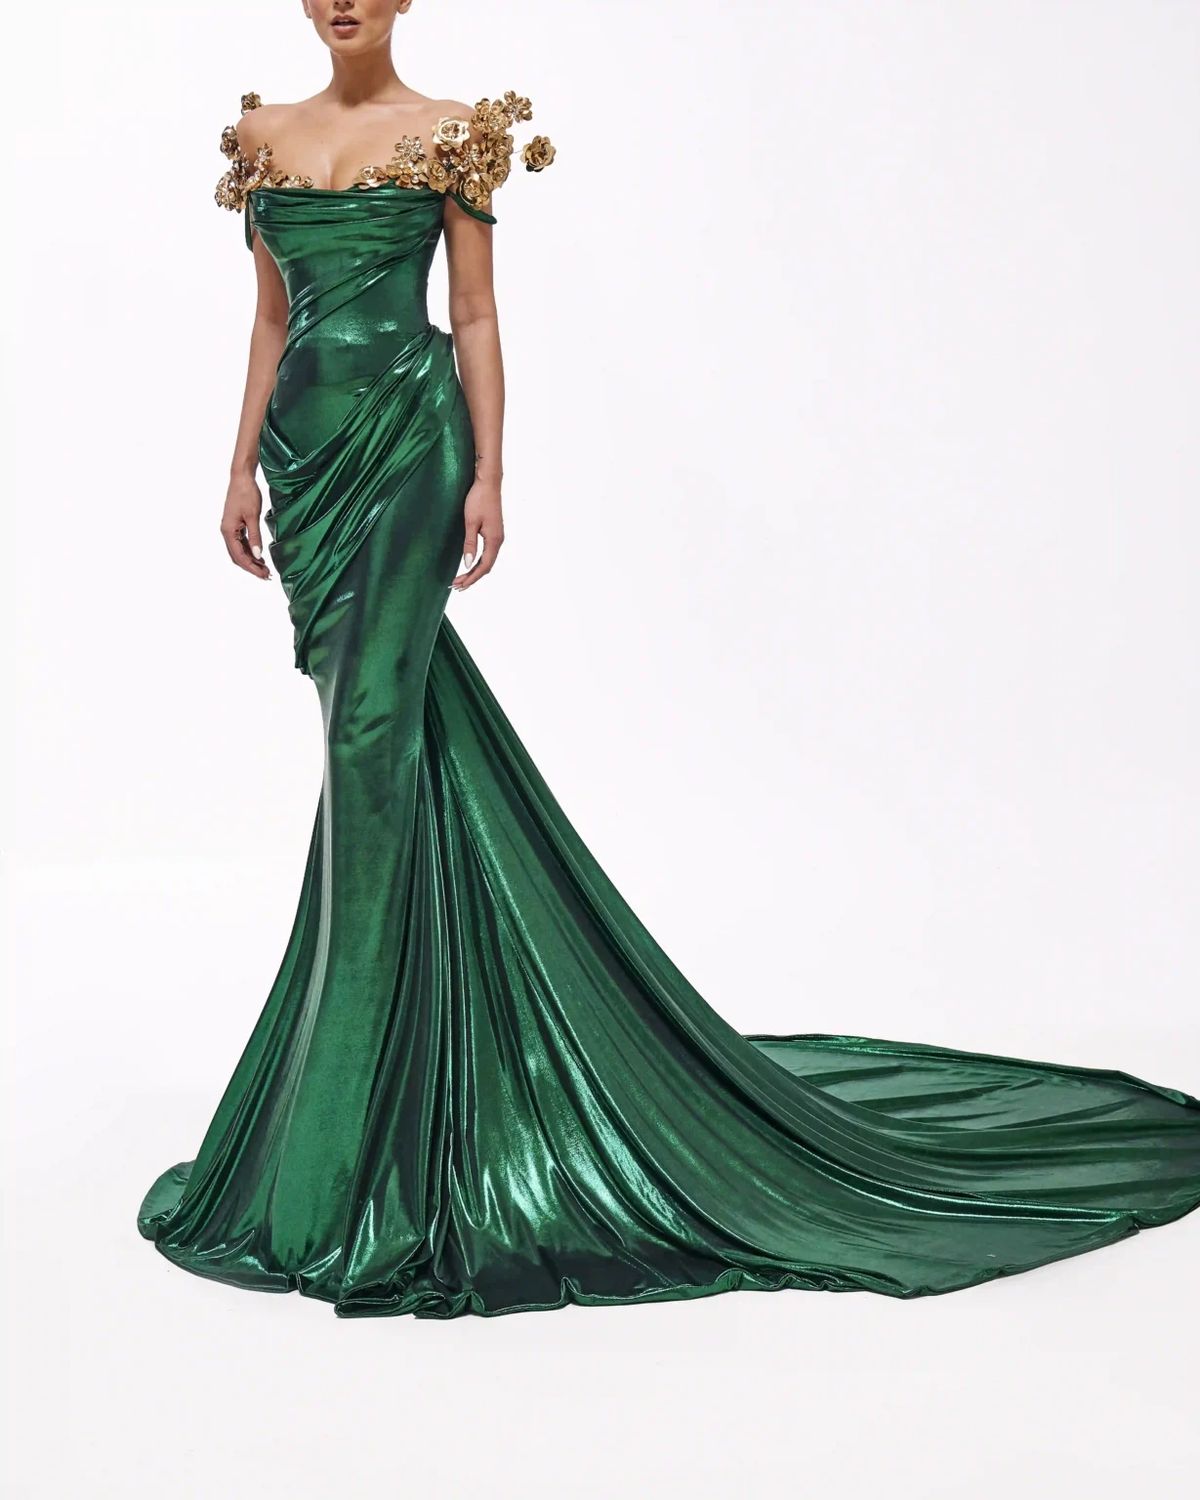 Style metallic-majesty-24-26 Valdrin Sahiti Size XL Pageant Green Mermaid Dress on Queenly